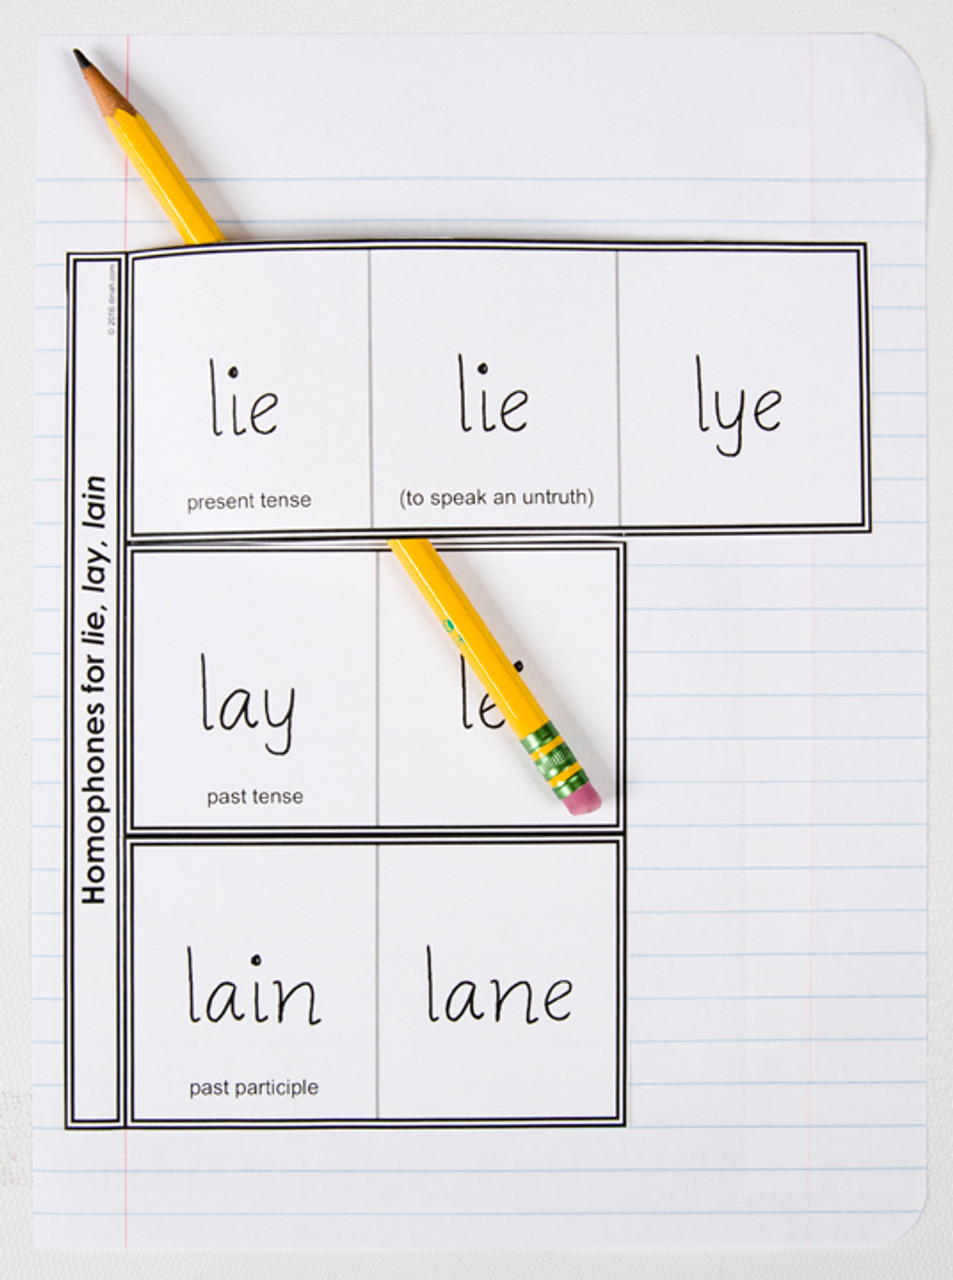 D-NC-L110-0054-EN-B-Homophones: lie, lay, lain notebook